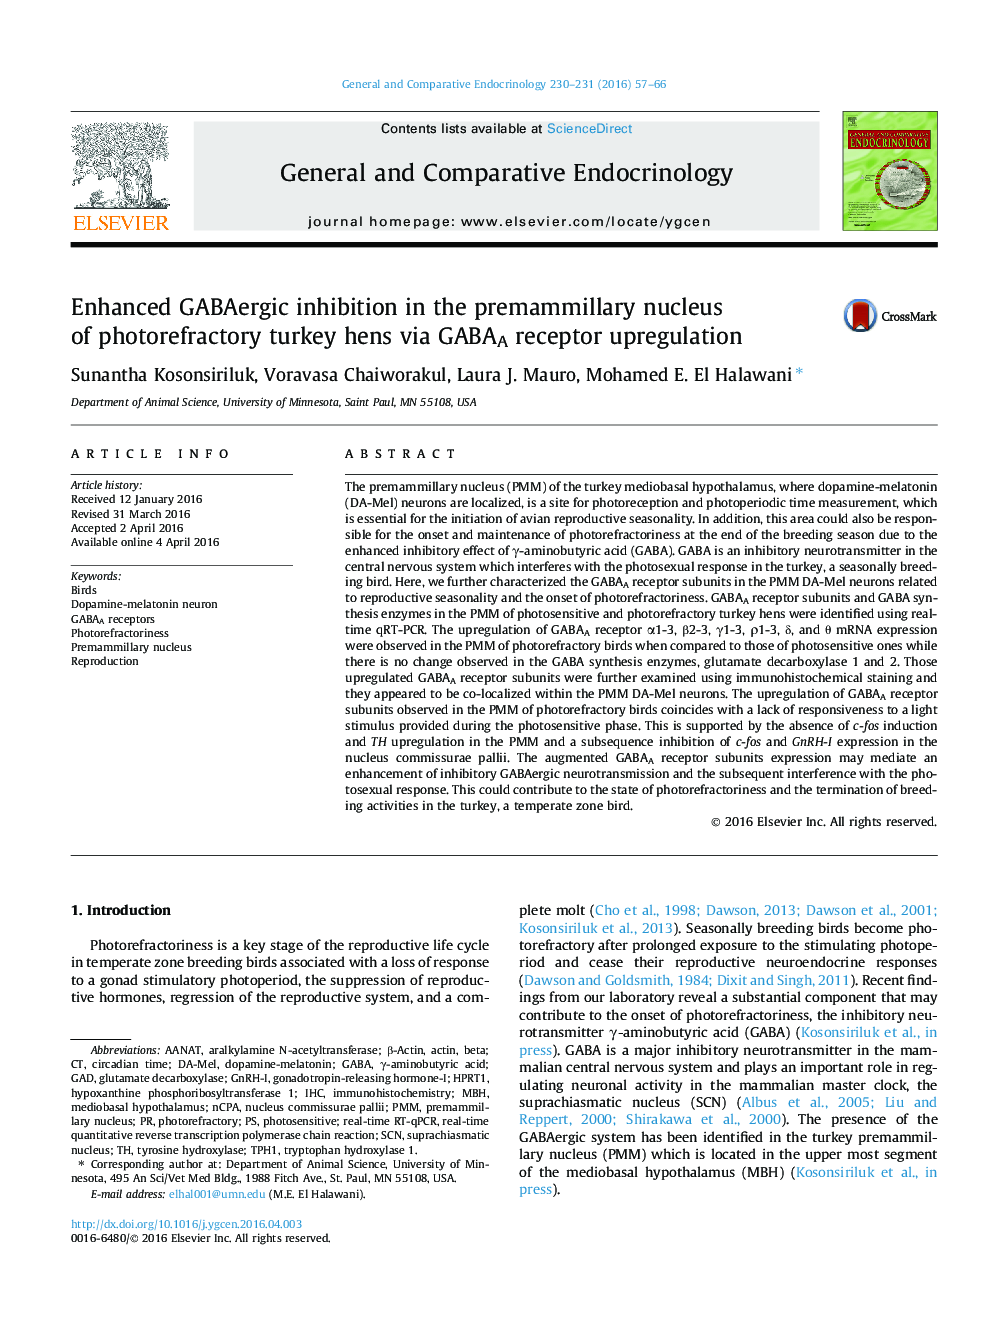 Enhanced GABAergic inhibition in the premammillary nucleus of photorefractory turkey hens via GABAA receptor upregulation